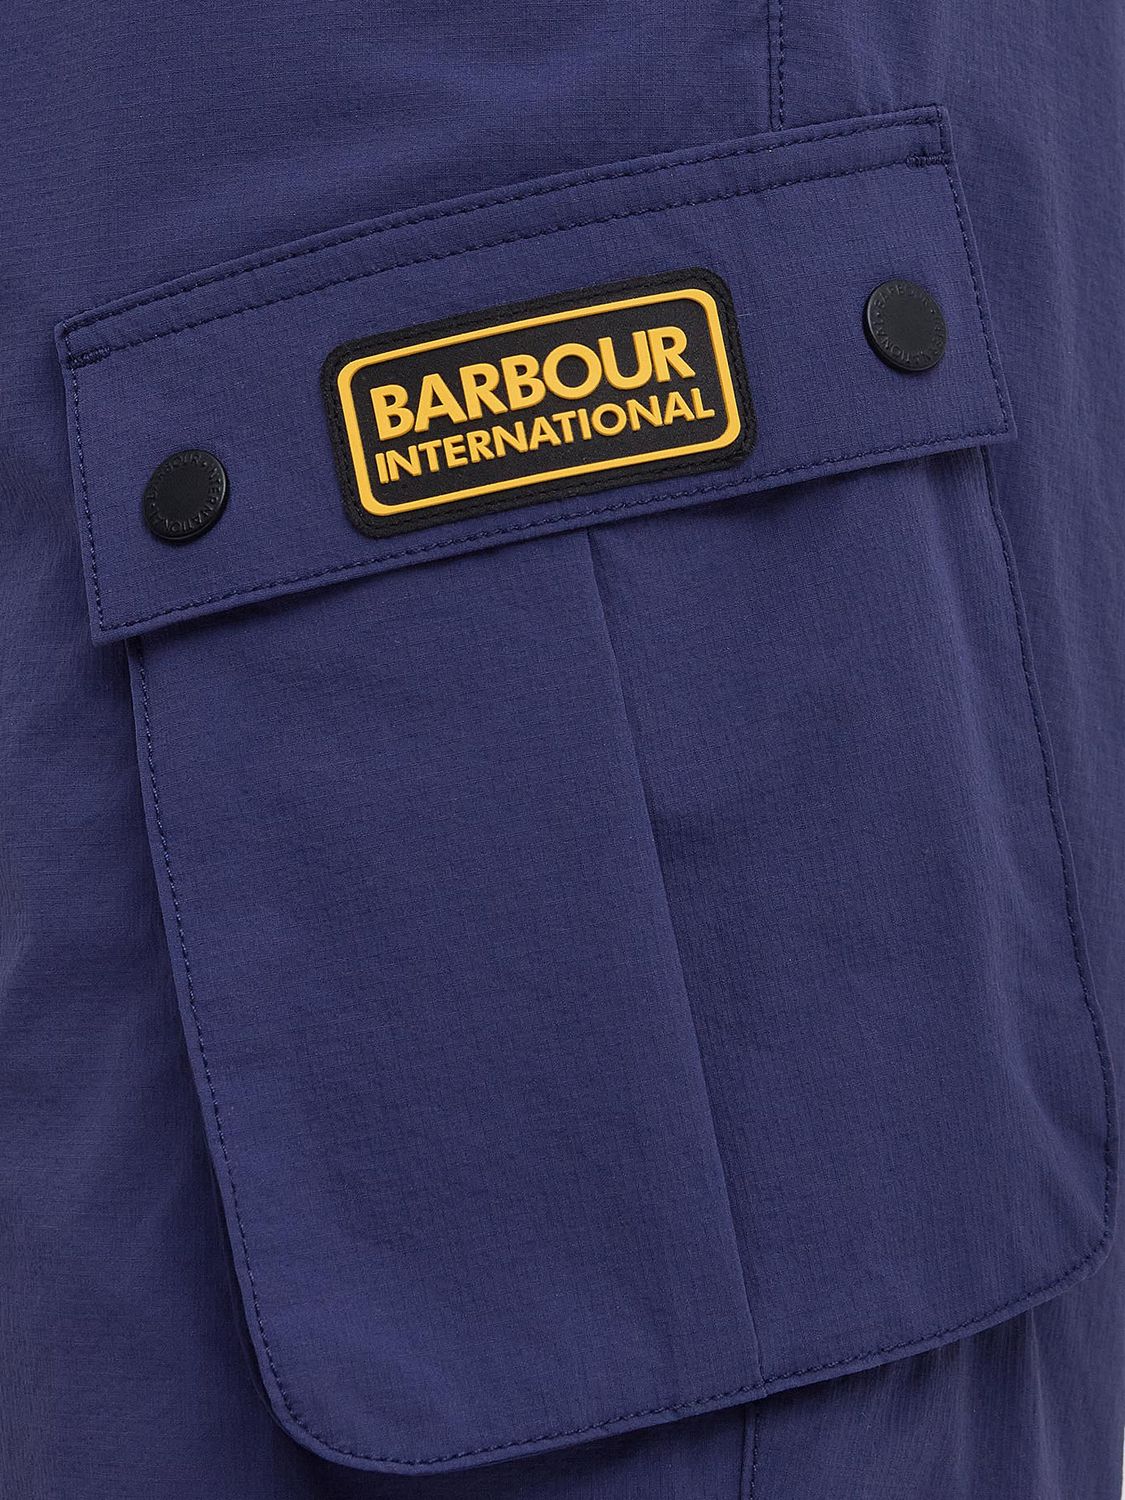 Barbour International Gate Shorts, Navy, S